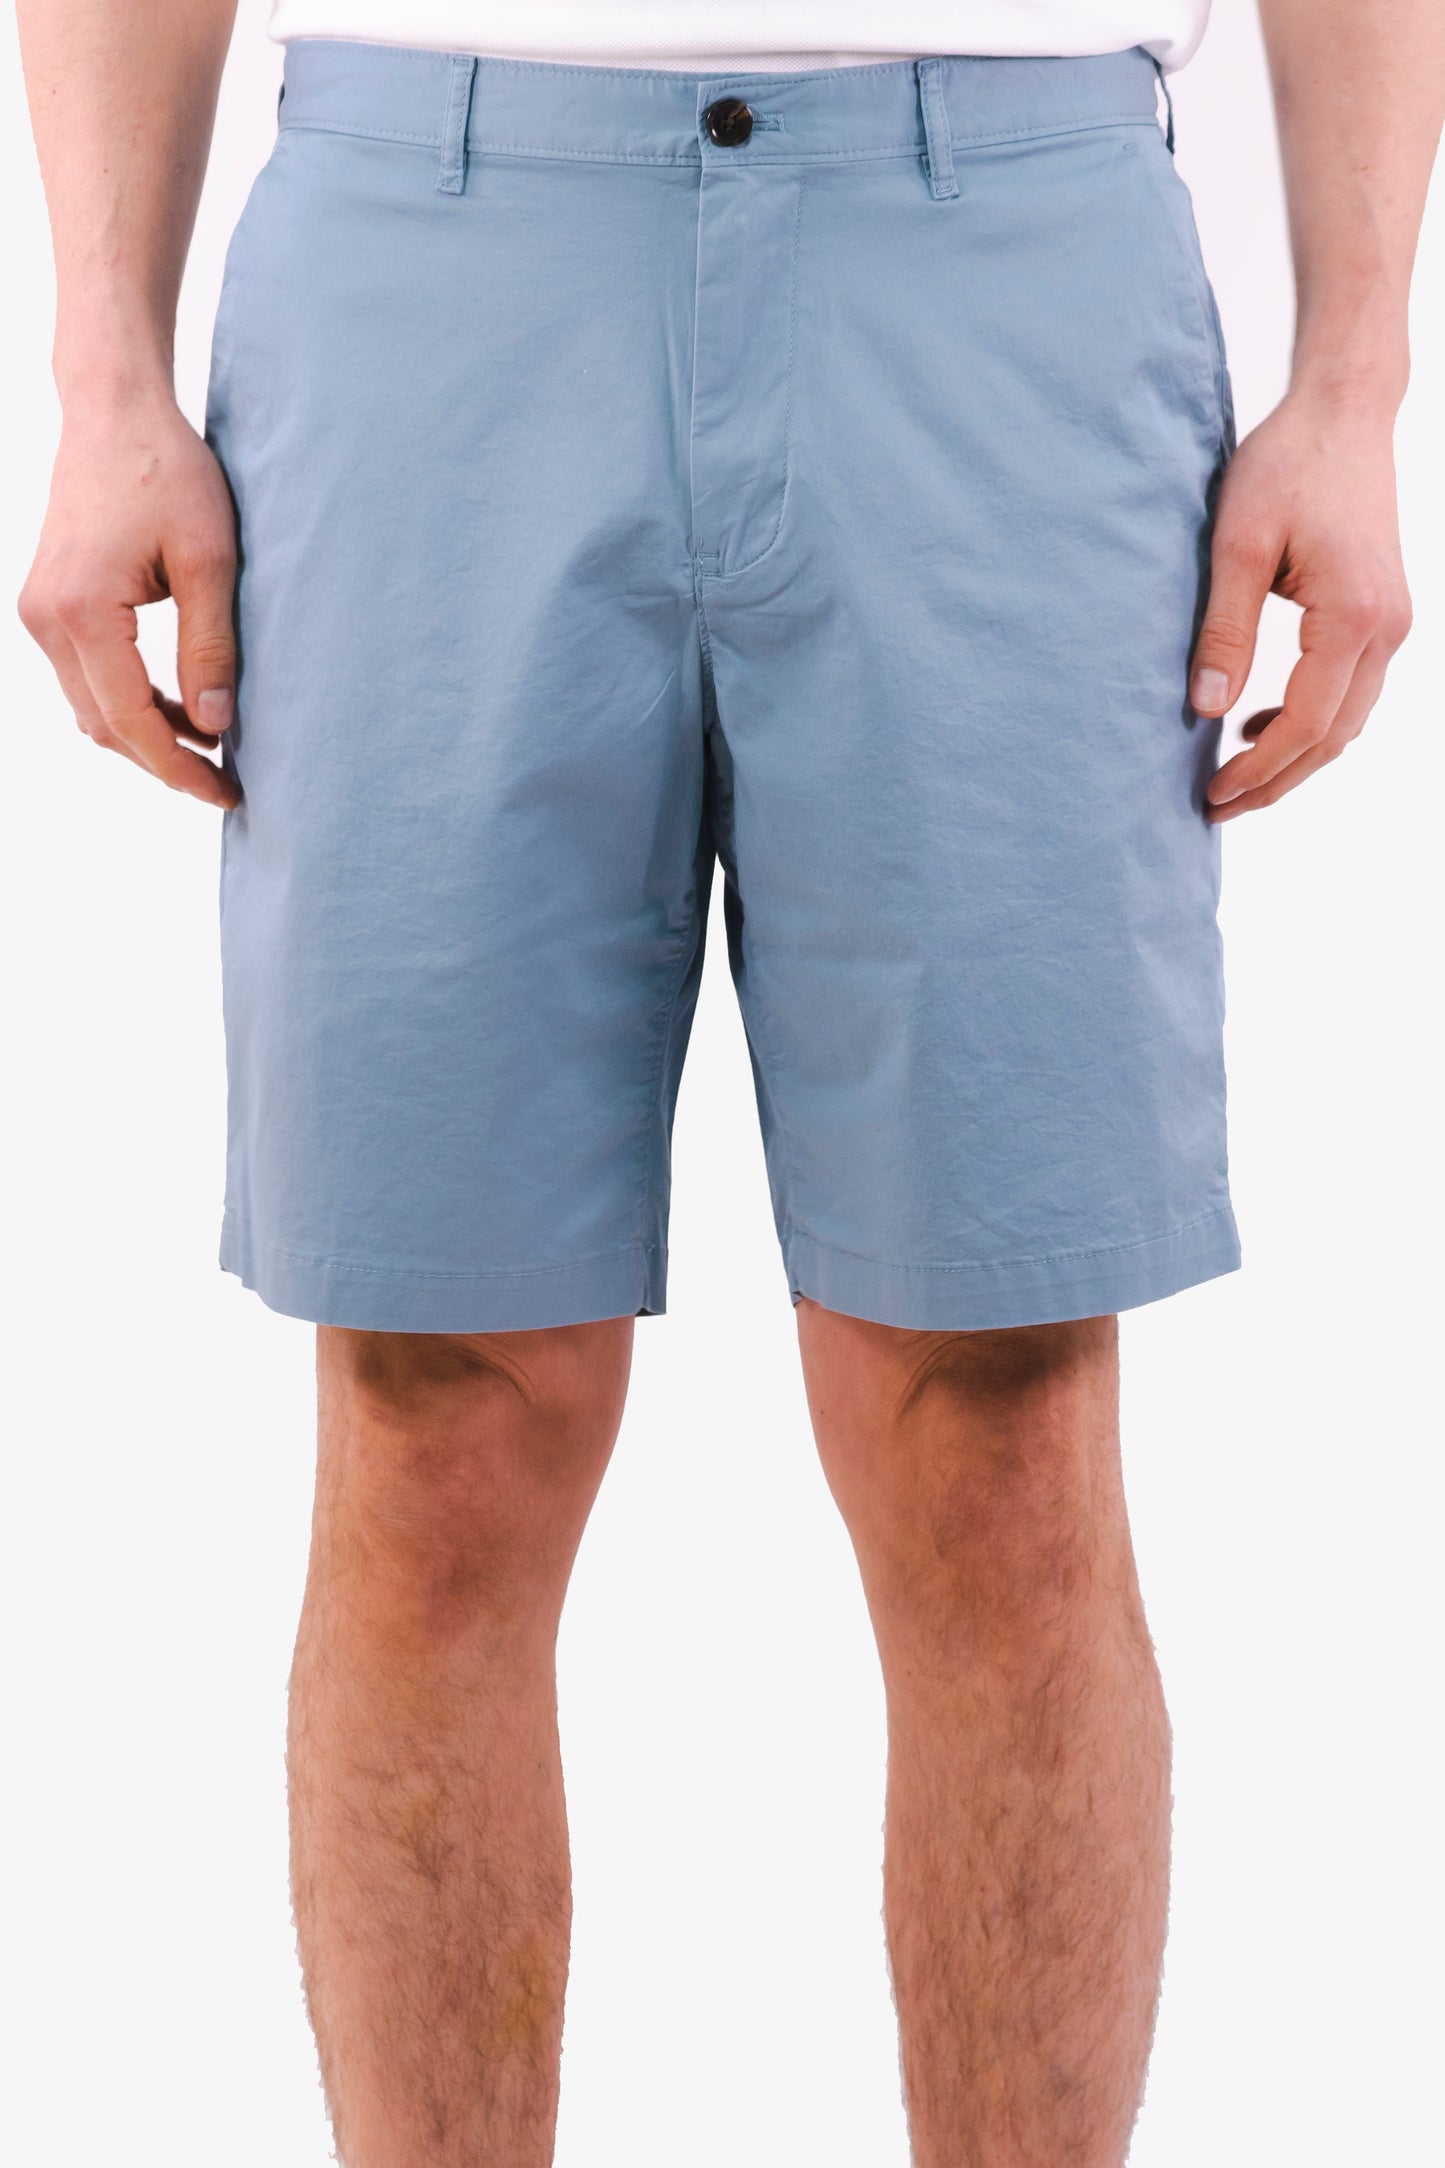 Blue Michael Kors shorts